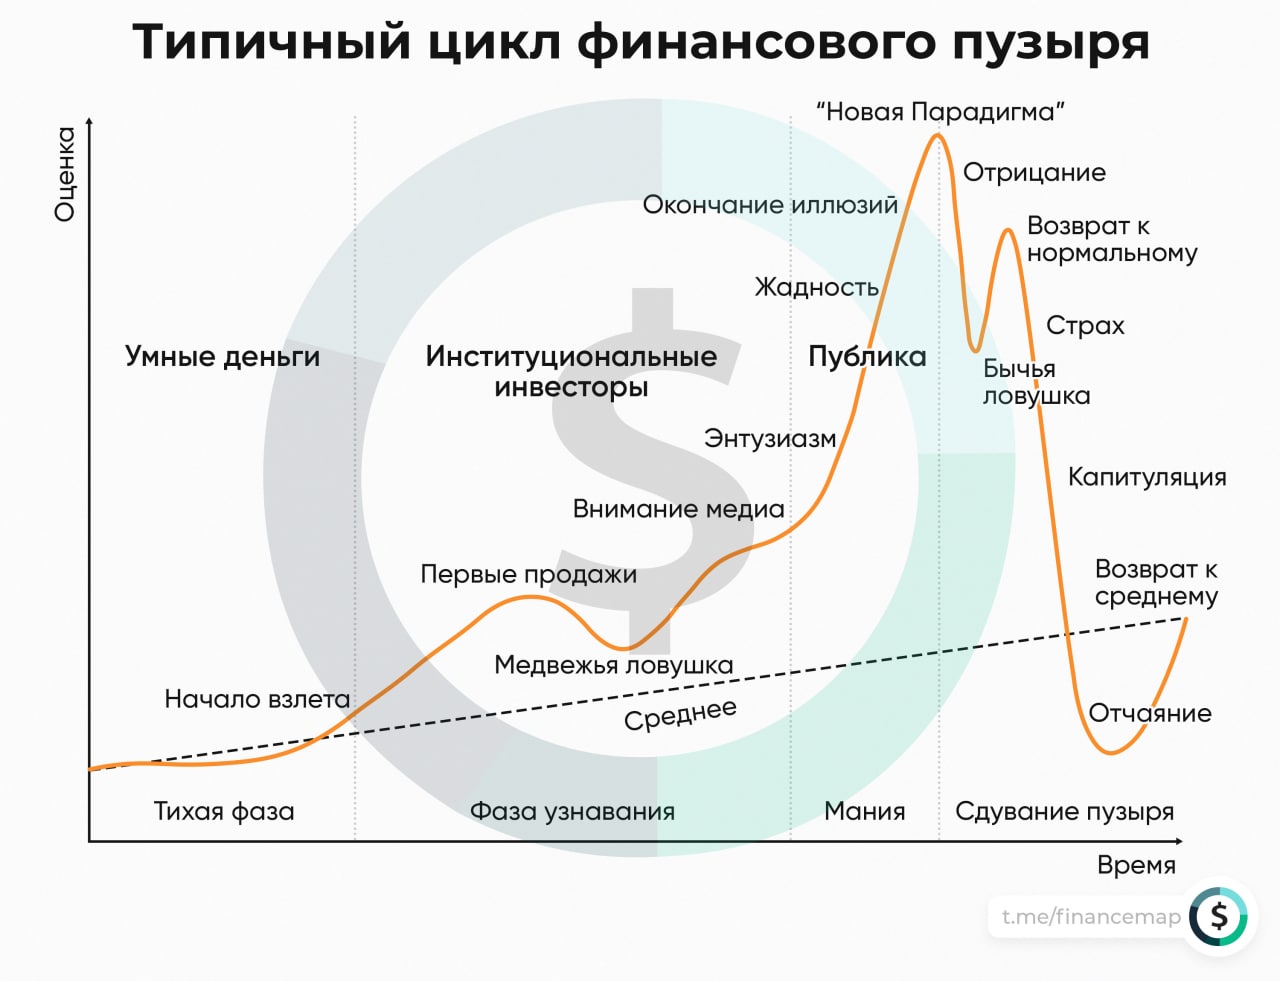 Этапы финансового цикла. Финансовый цикл пузырь. Пузыри на финансовых рынках. Финансовый пузырь график. График пузыря на рынке.